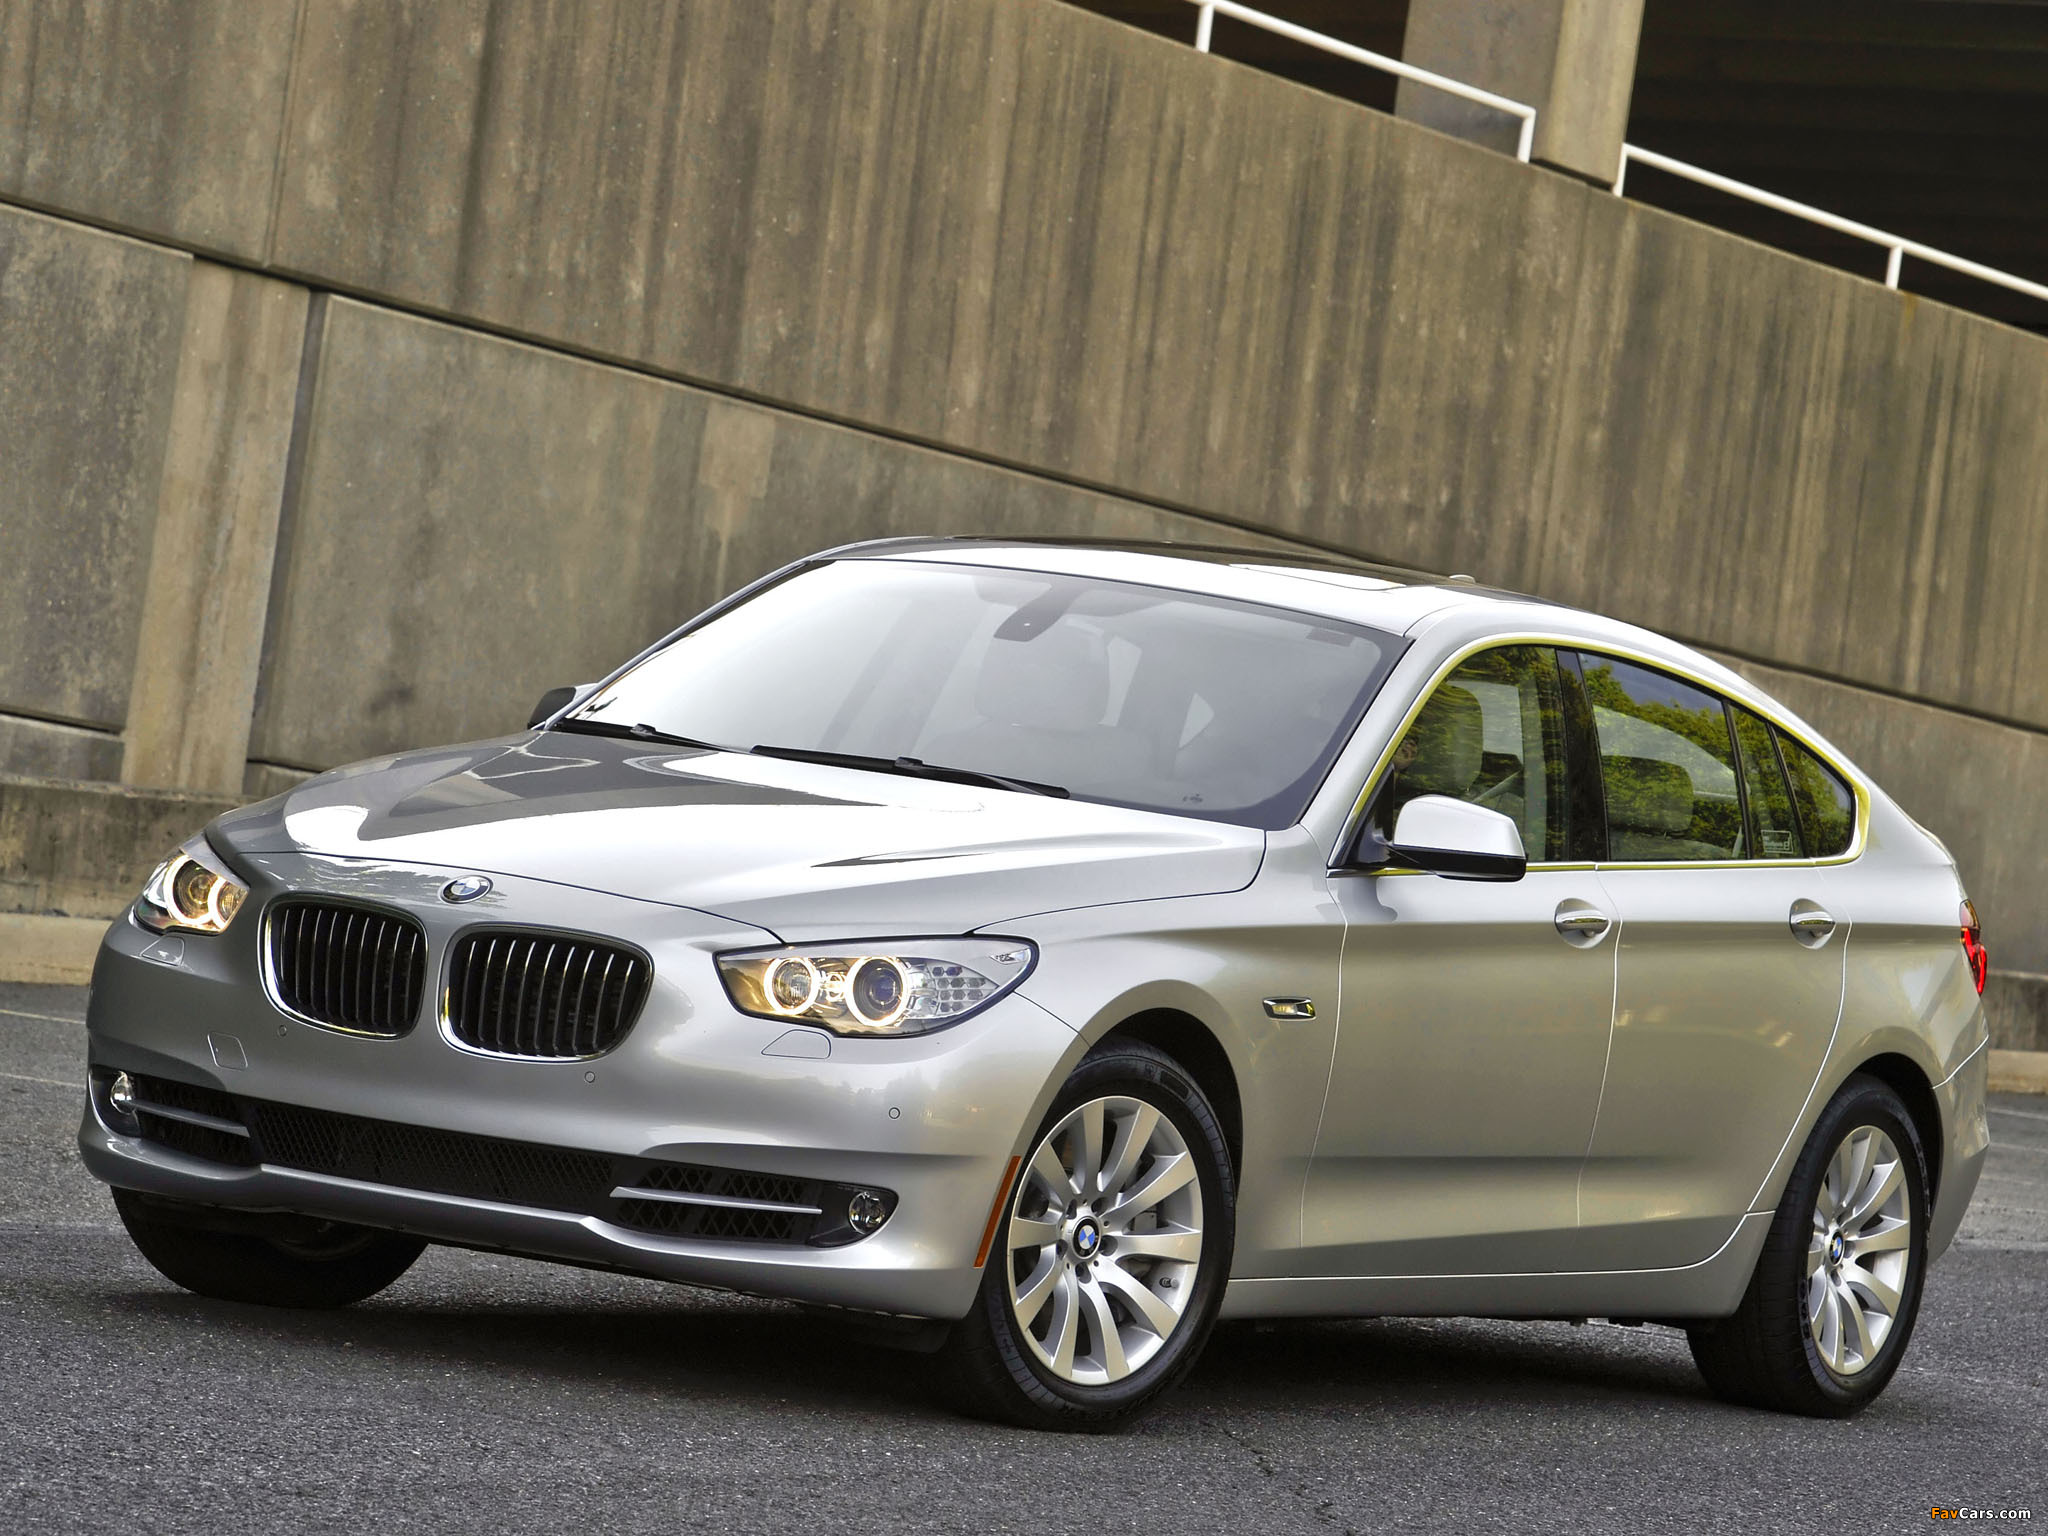 Bmw gt купить. BMW 5 gt. BMW 5 gt 2012. BMW 535i Gran Turismo. BMW 5 gt 2013.